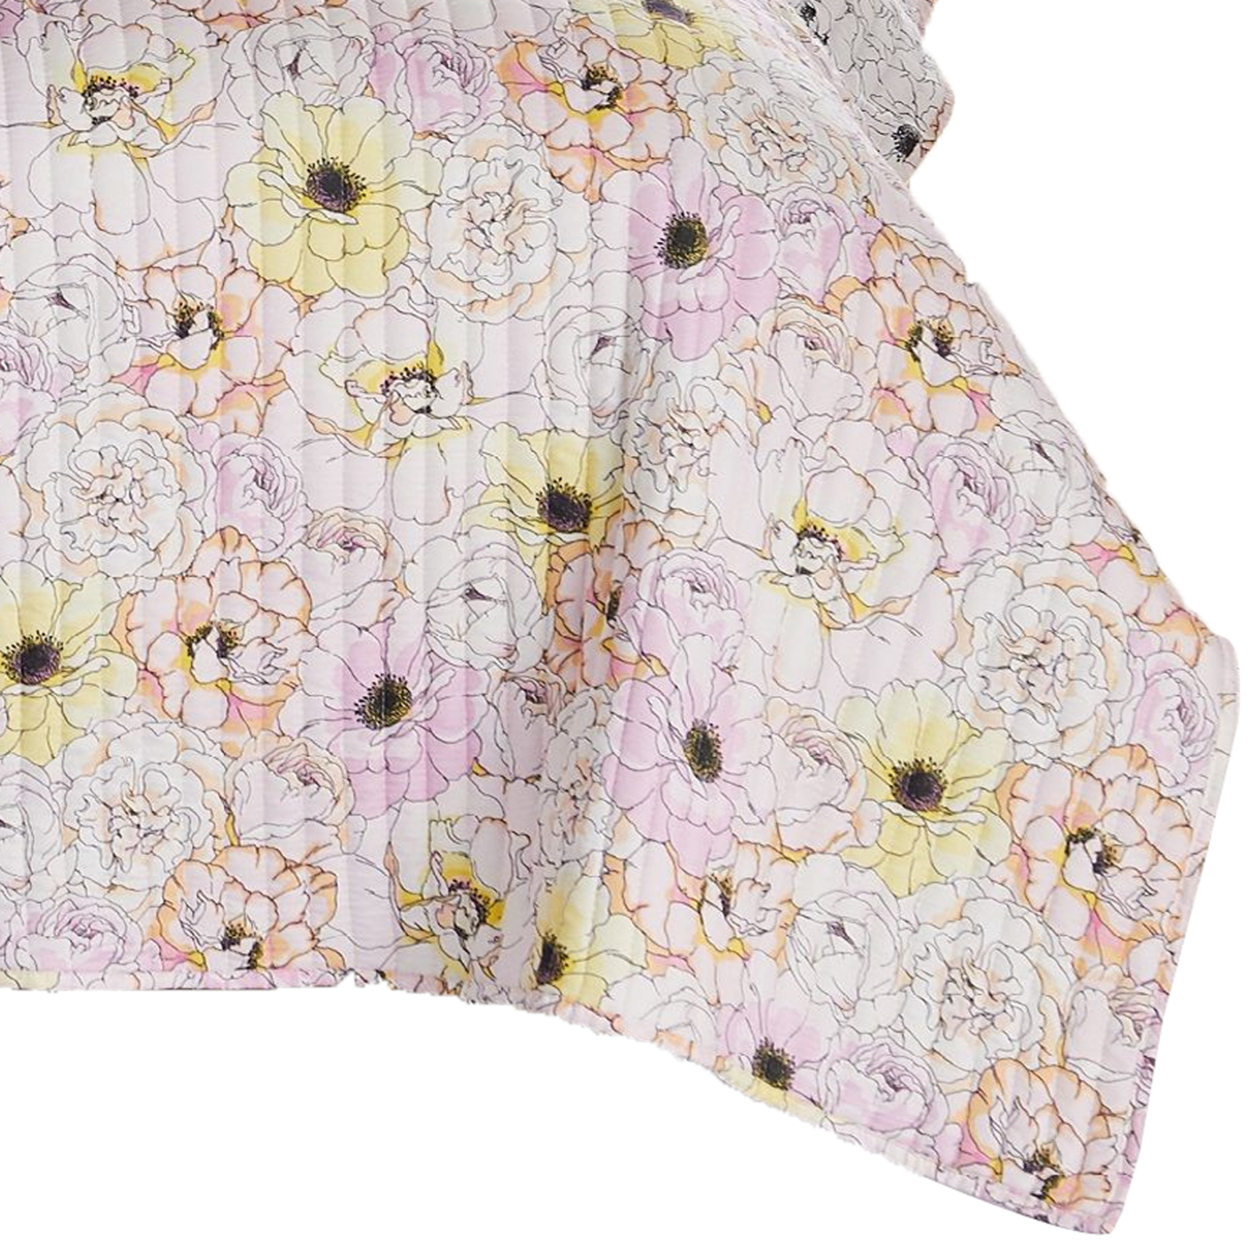 Milan 3 Piece Microfiber Blooming Flower Pattern Queen Quilt Set, White And Pink- Saltoro Sherpi